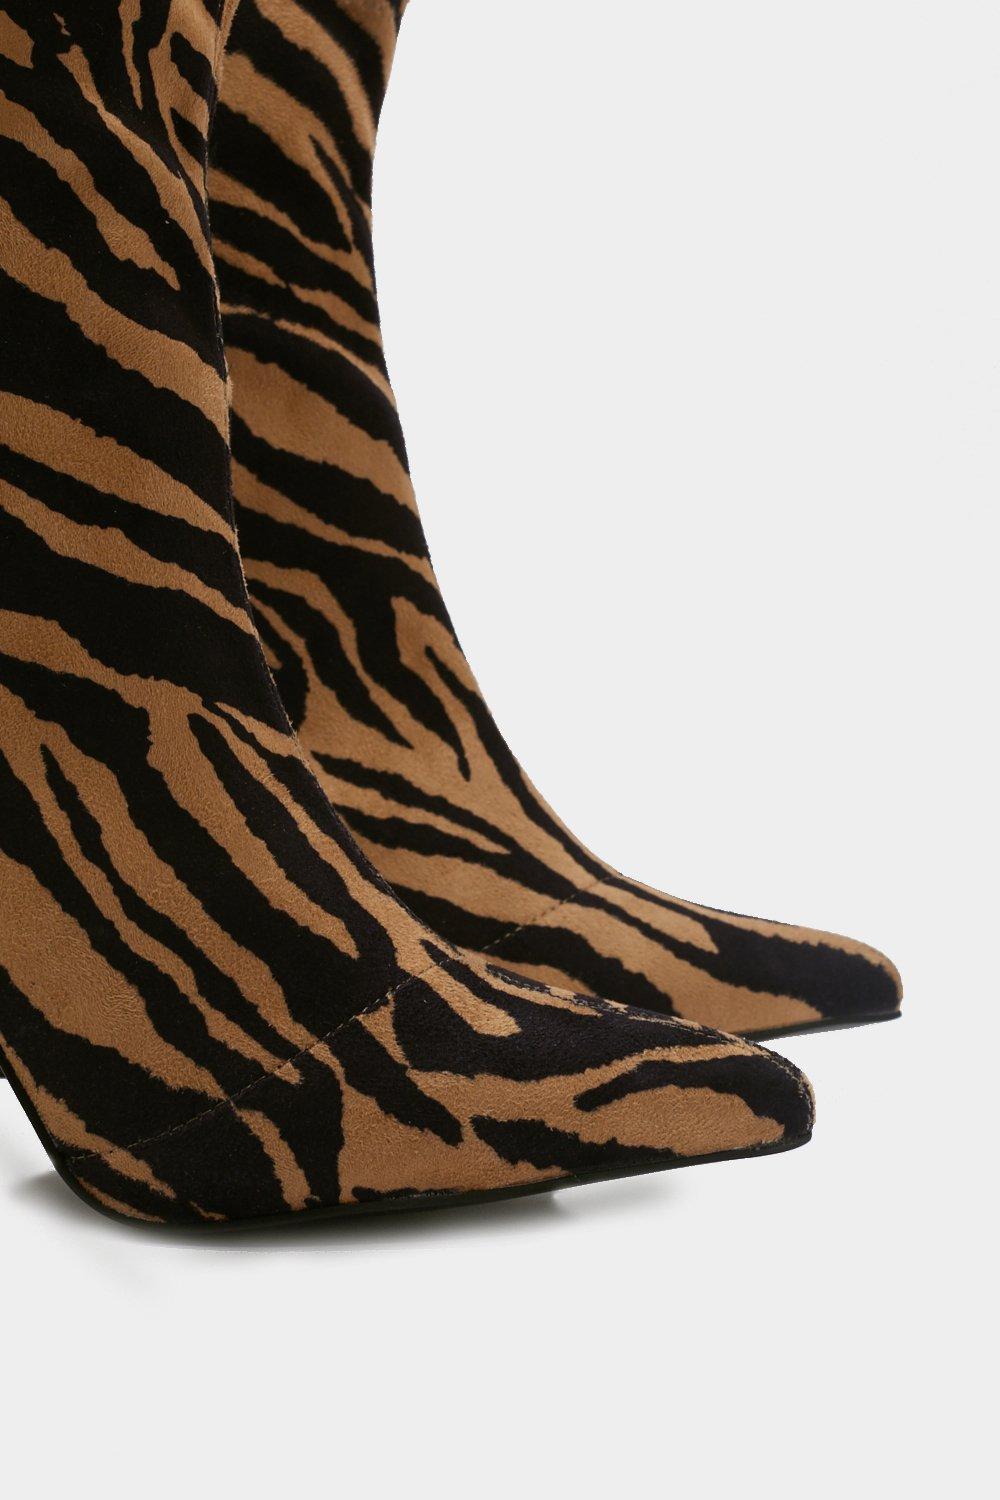 tiger boots